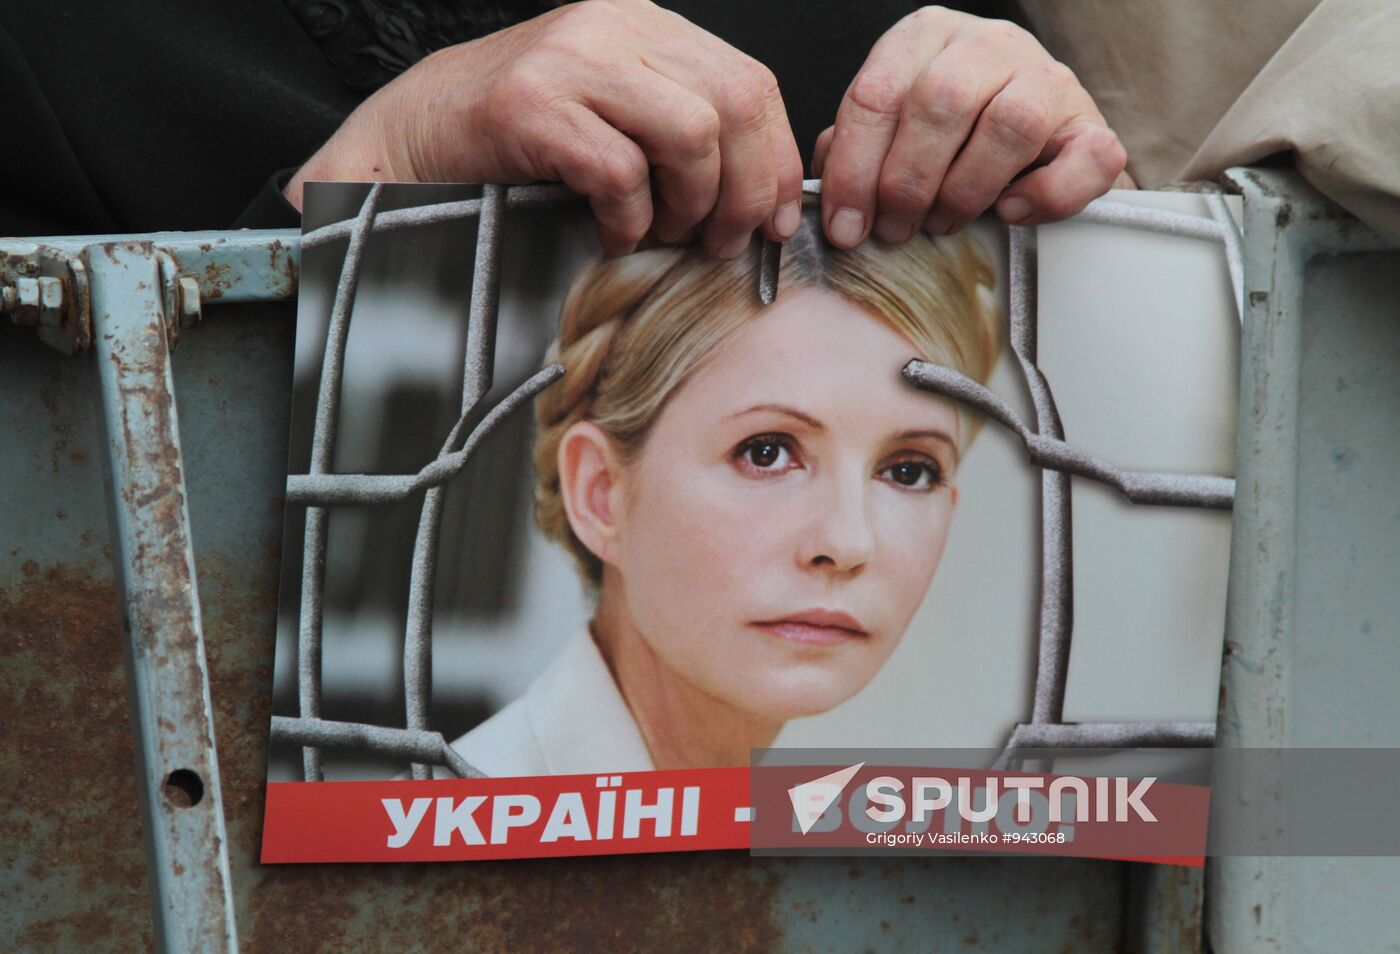 Yulia Tymoshenko supporters rally at Kiev's Pechersky court